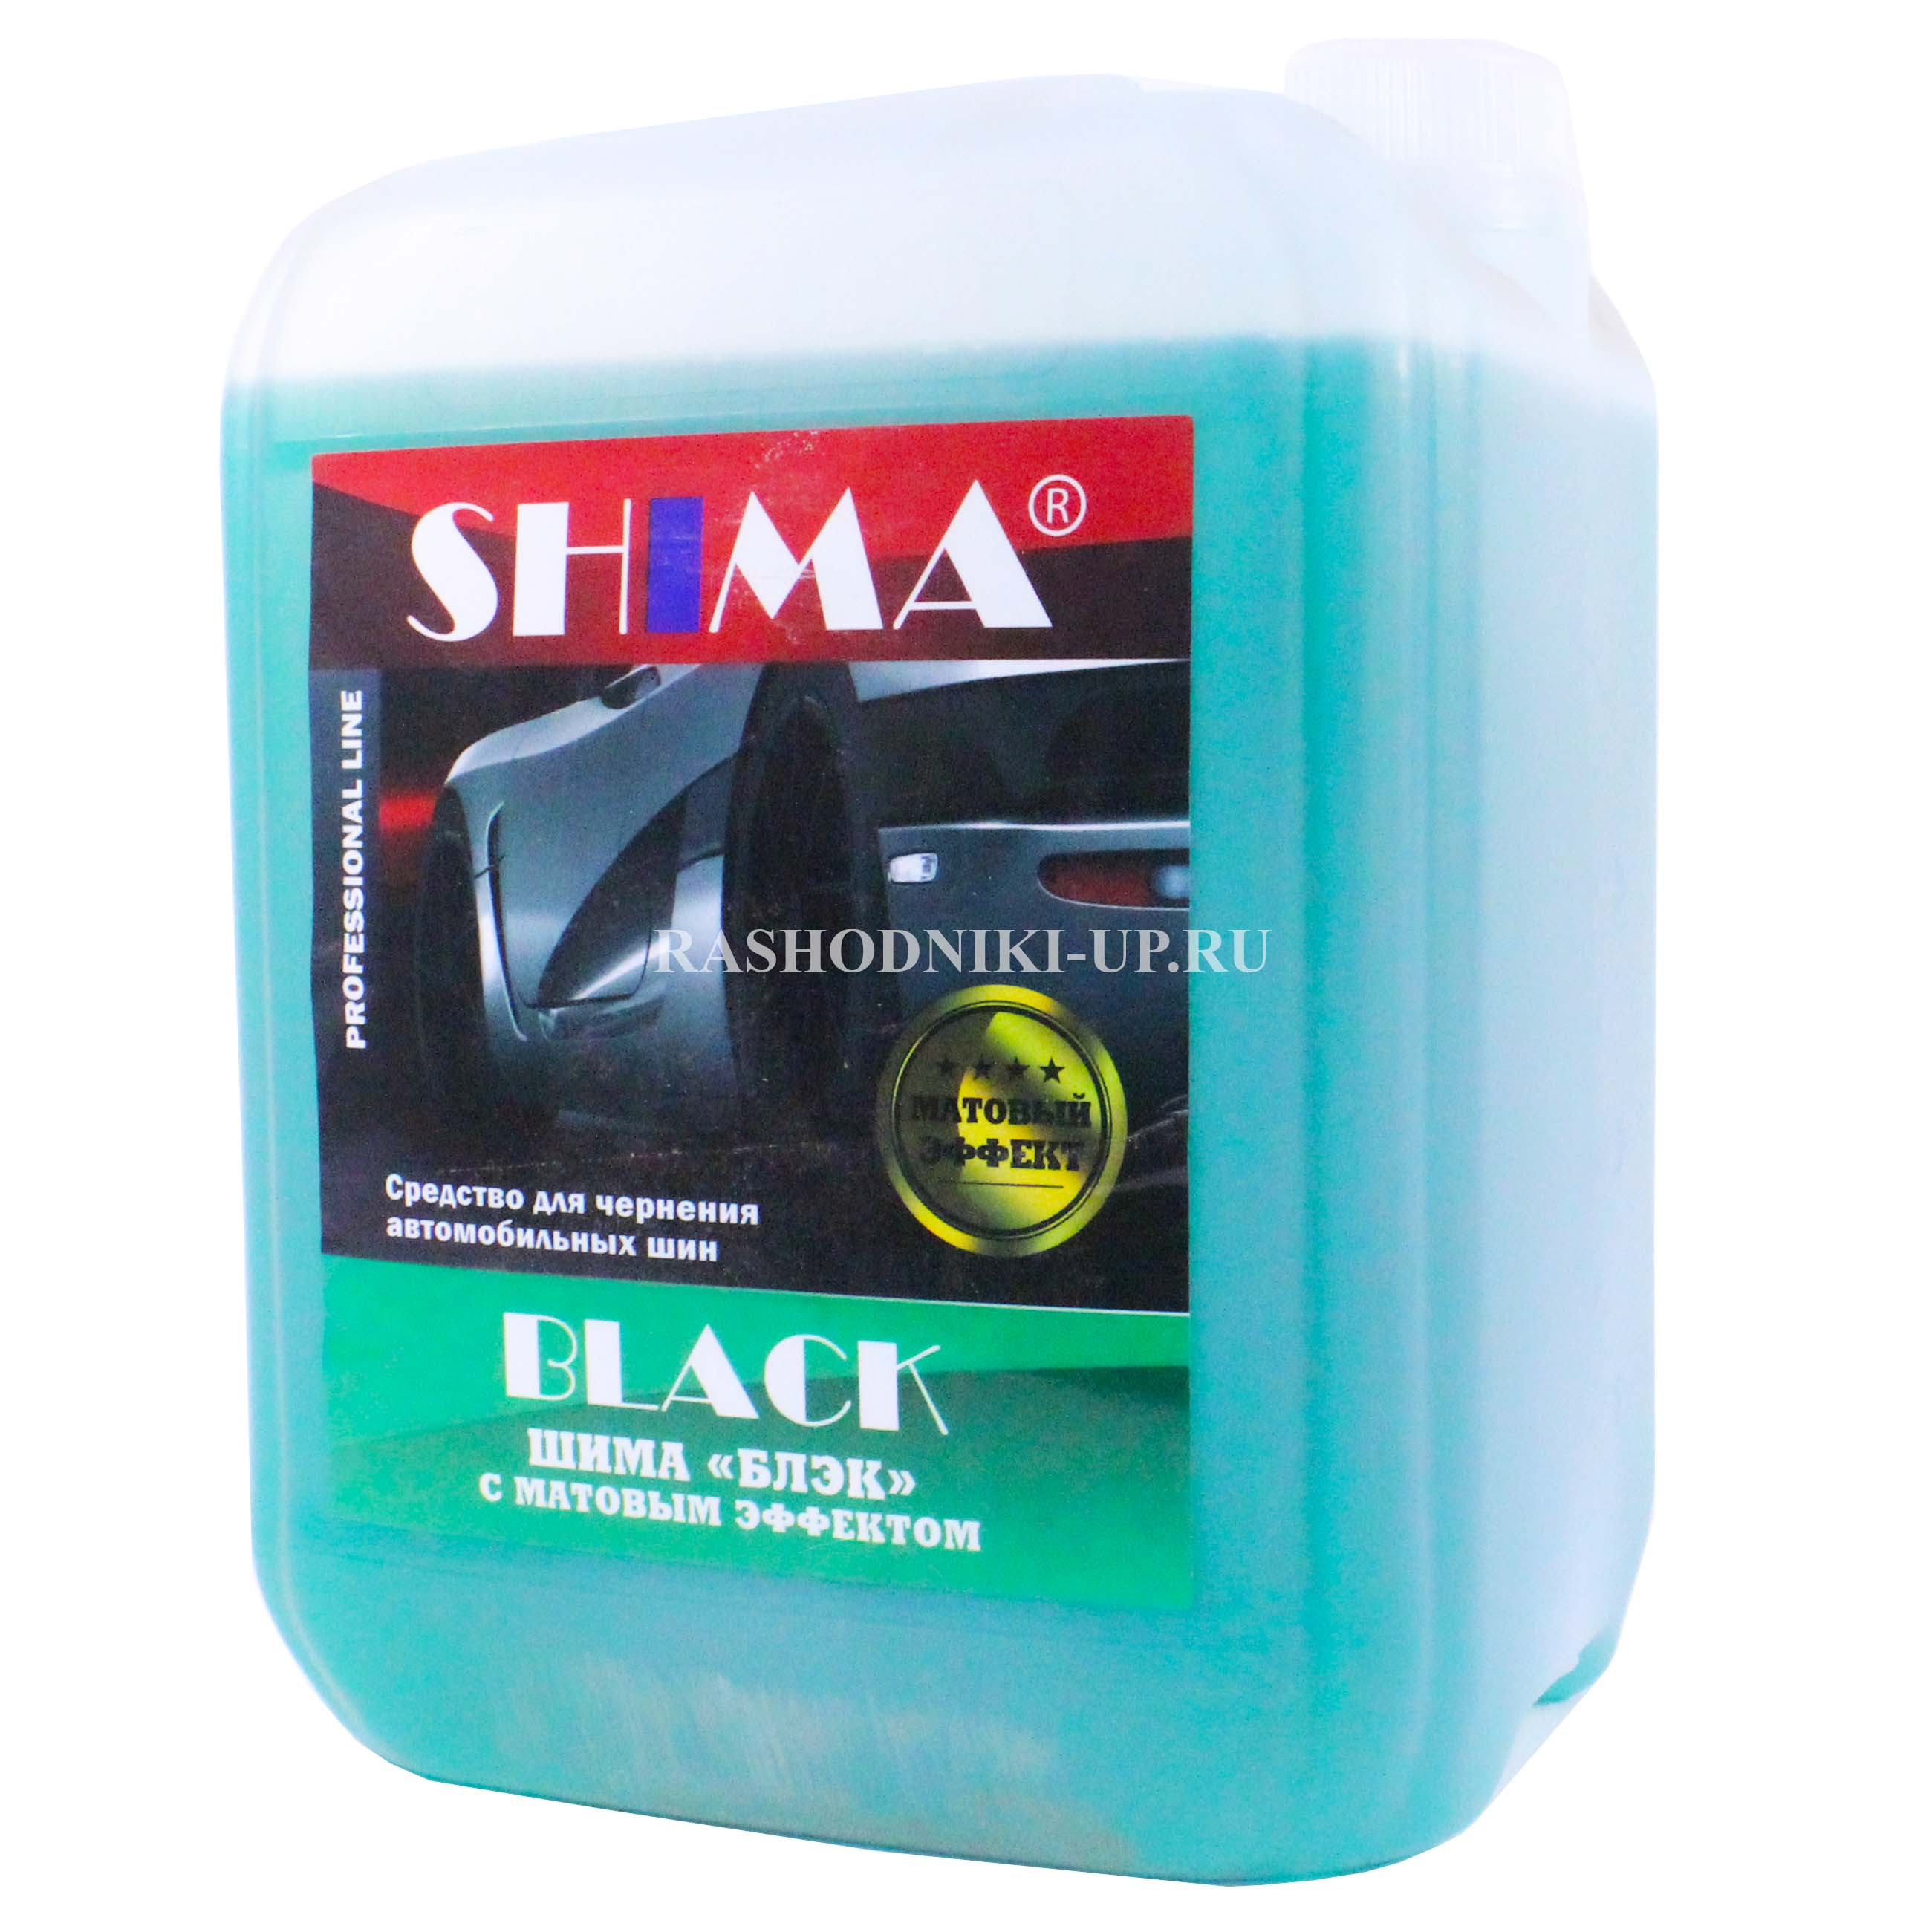 SHIMA BLACK Очиститель шин 5л